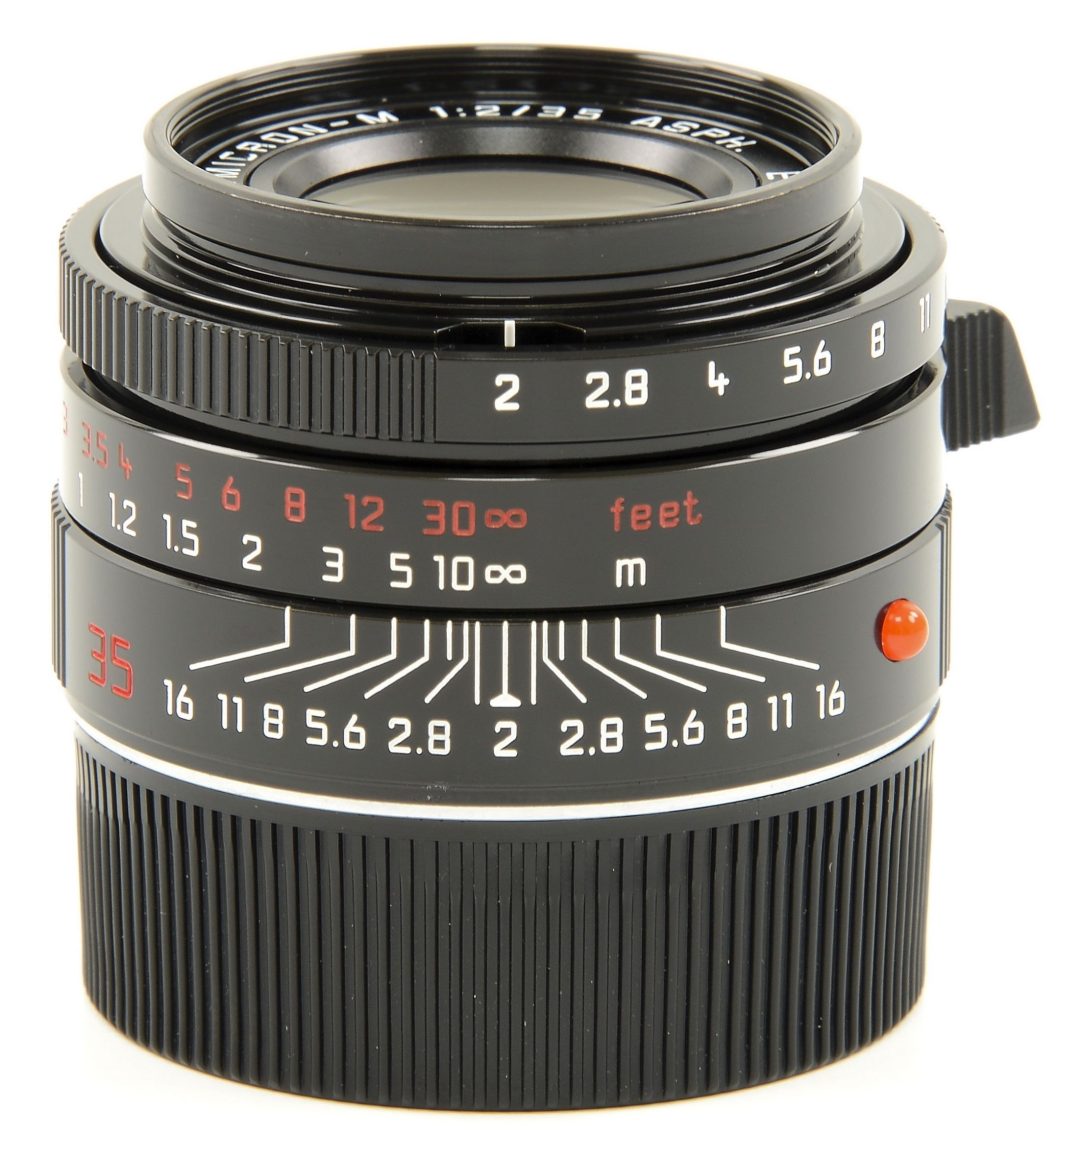 Leica SUMMICRON-M 35mm F/2 ASPH. for M6 TTL Millennium